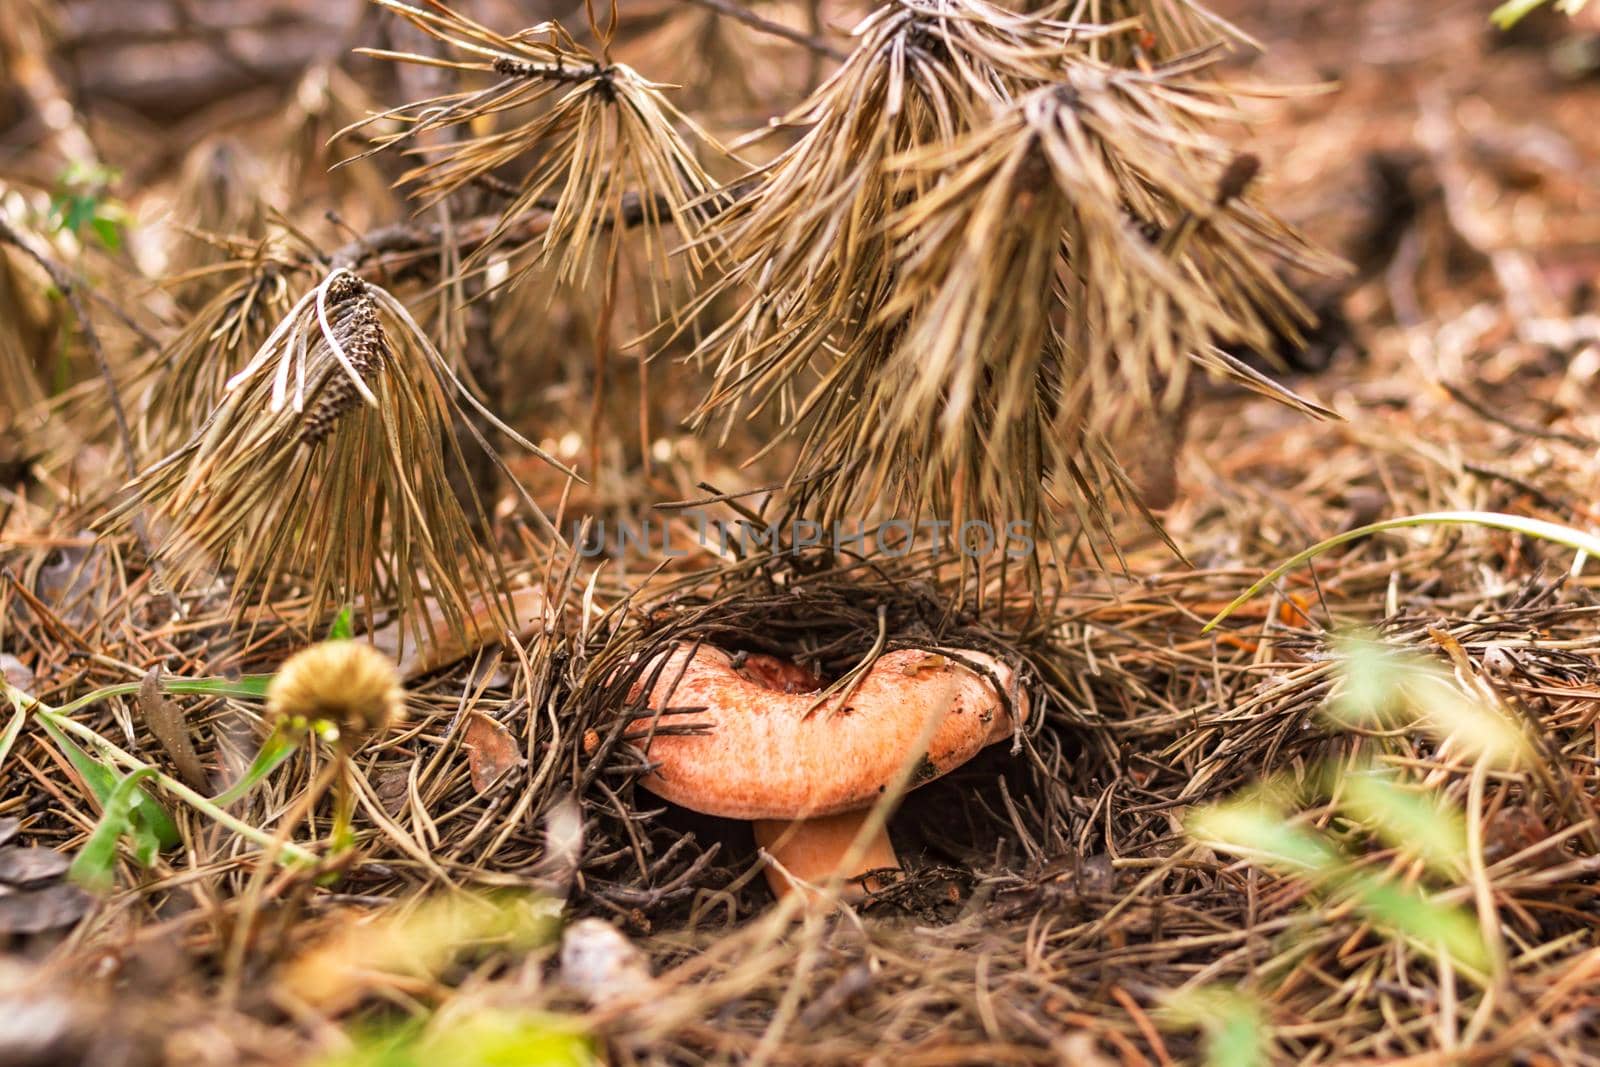 Saffron milk cap, Lactarius deliciosus, grows among fallen needles in coniferous forest, mushroom picking season, selective focus, close up